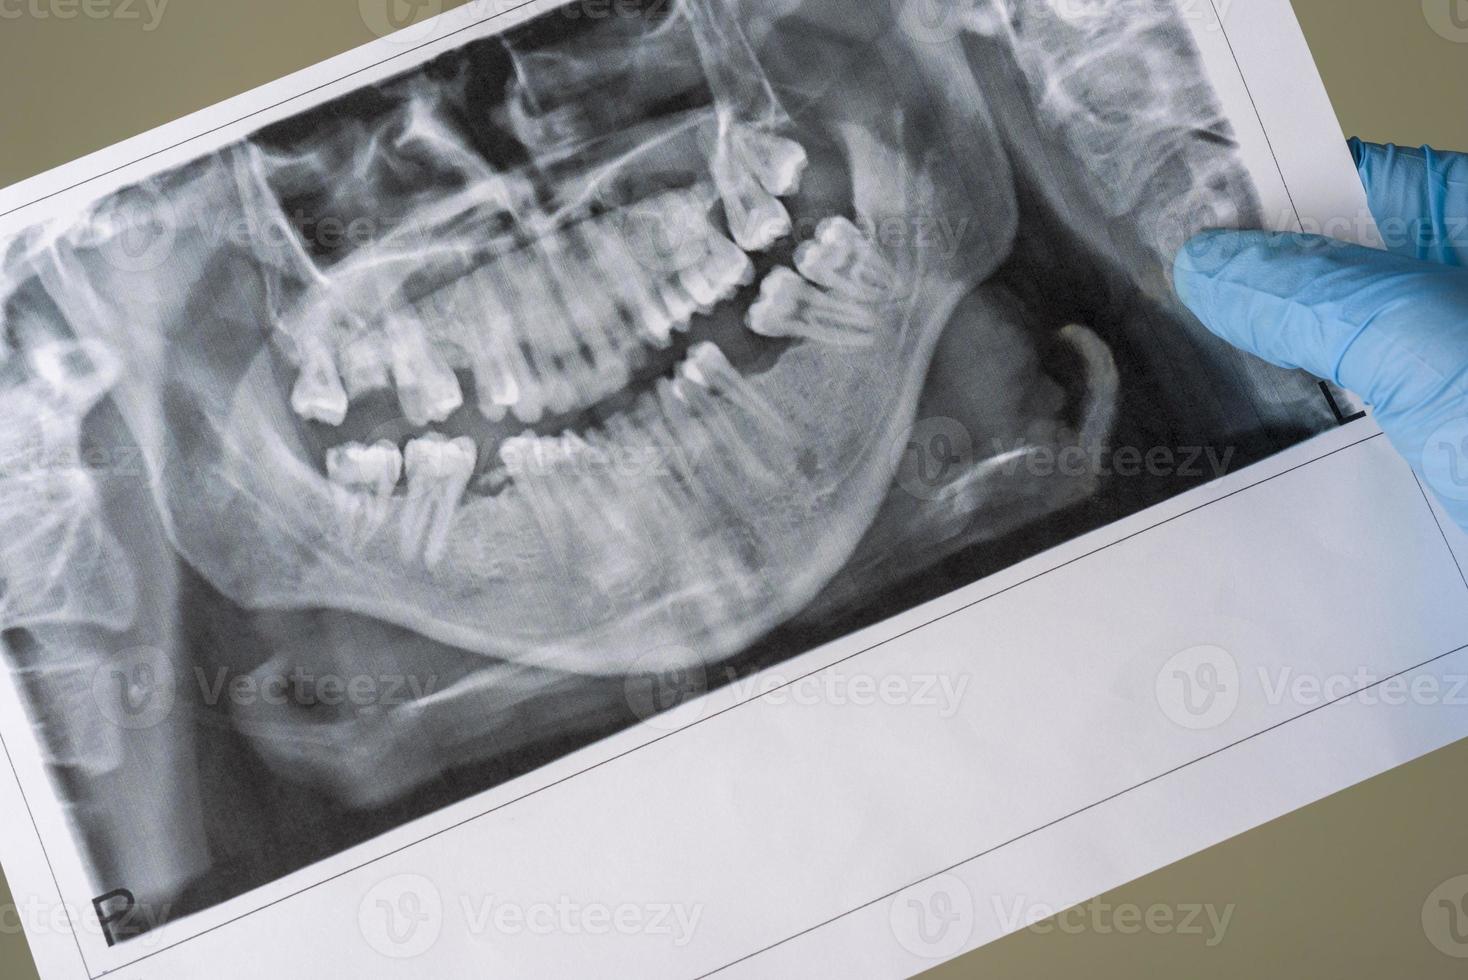 radiographie dentaire. une radiographie panoramique d'une bouche, avec zone douloureuse rouge. photo